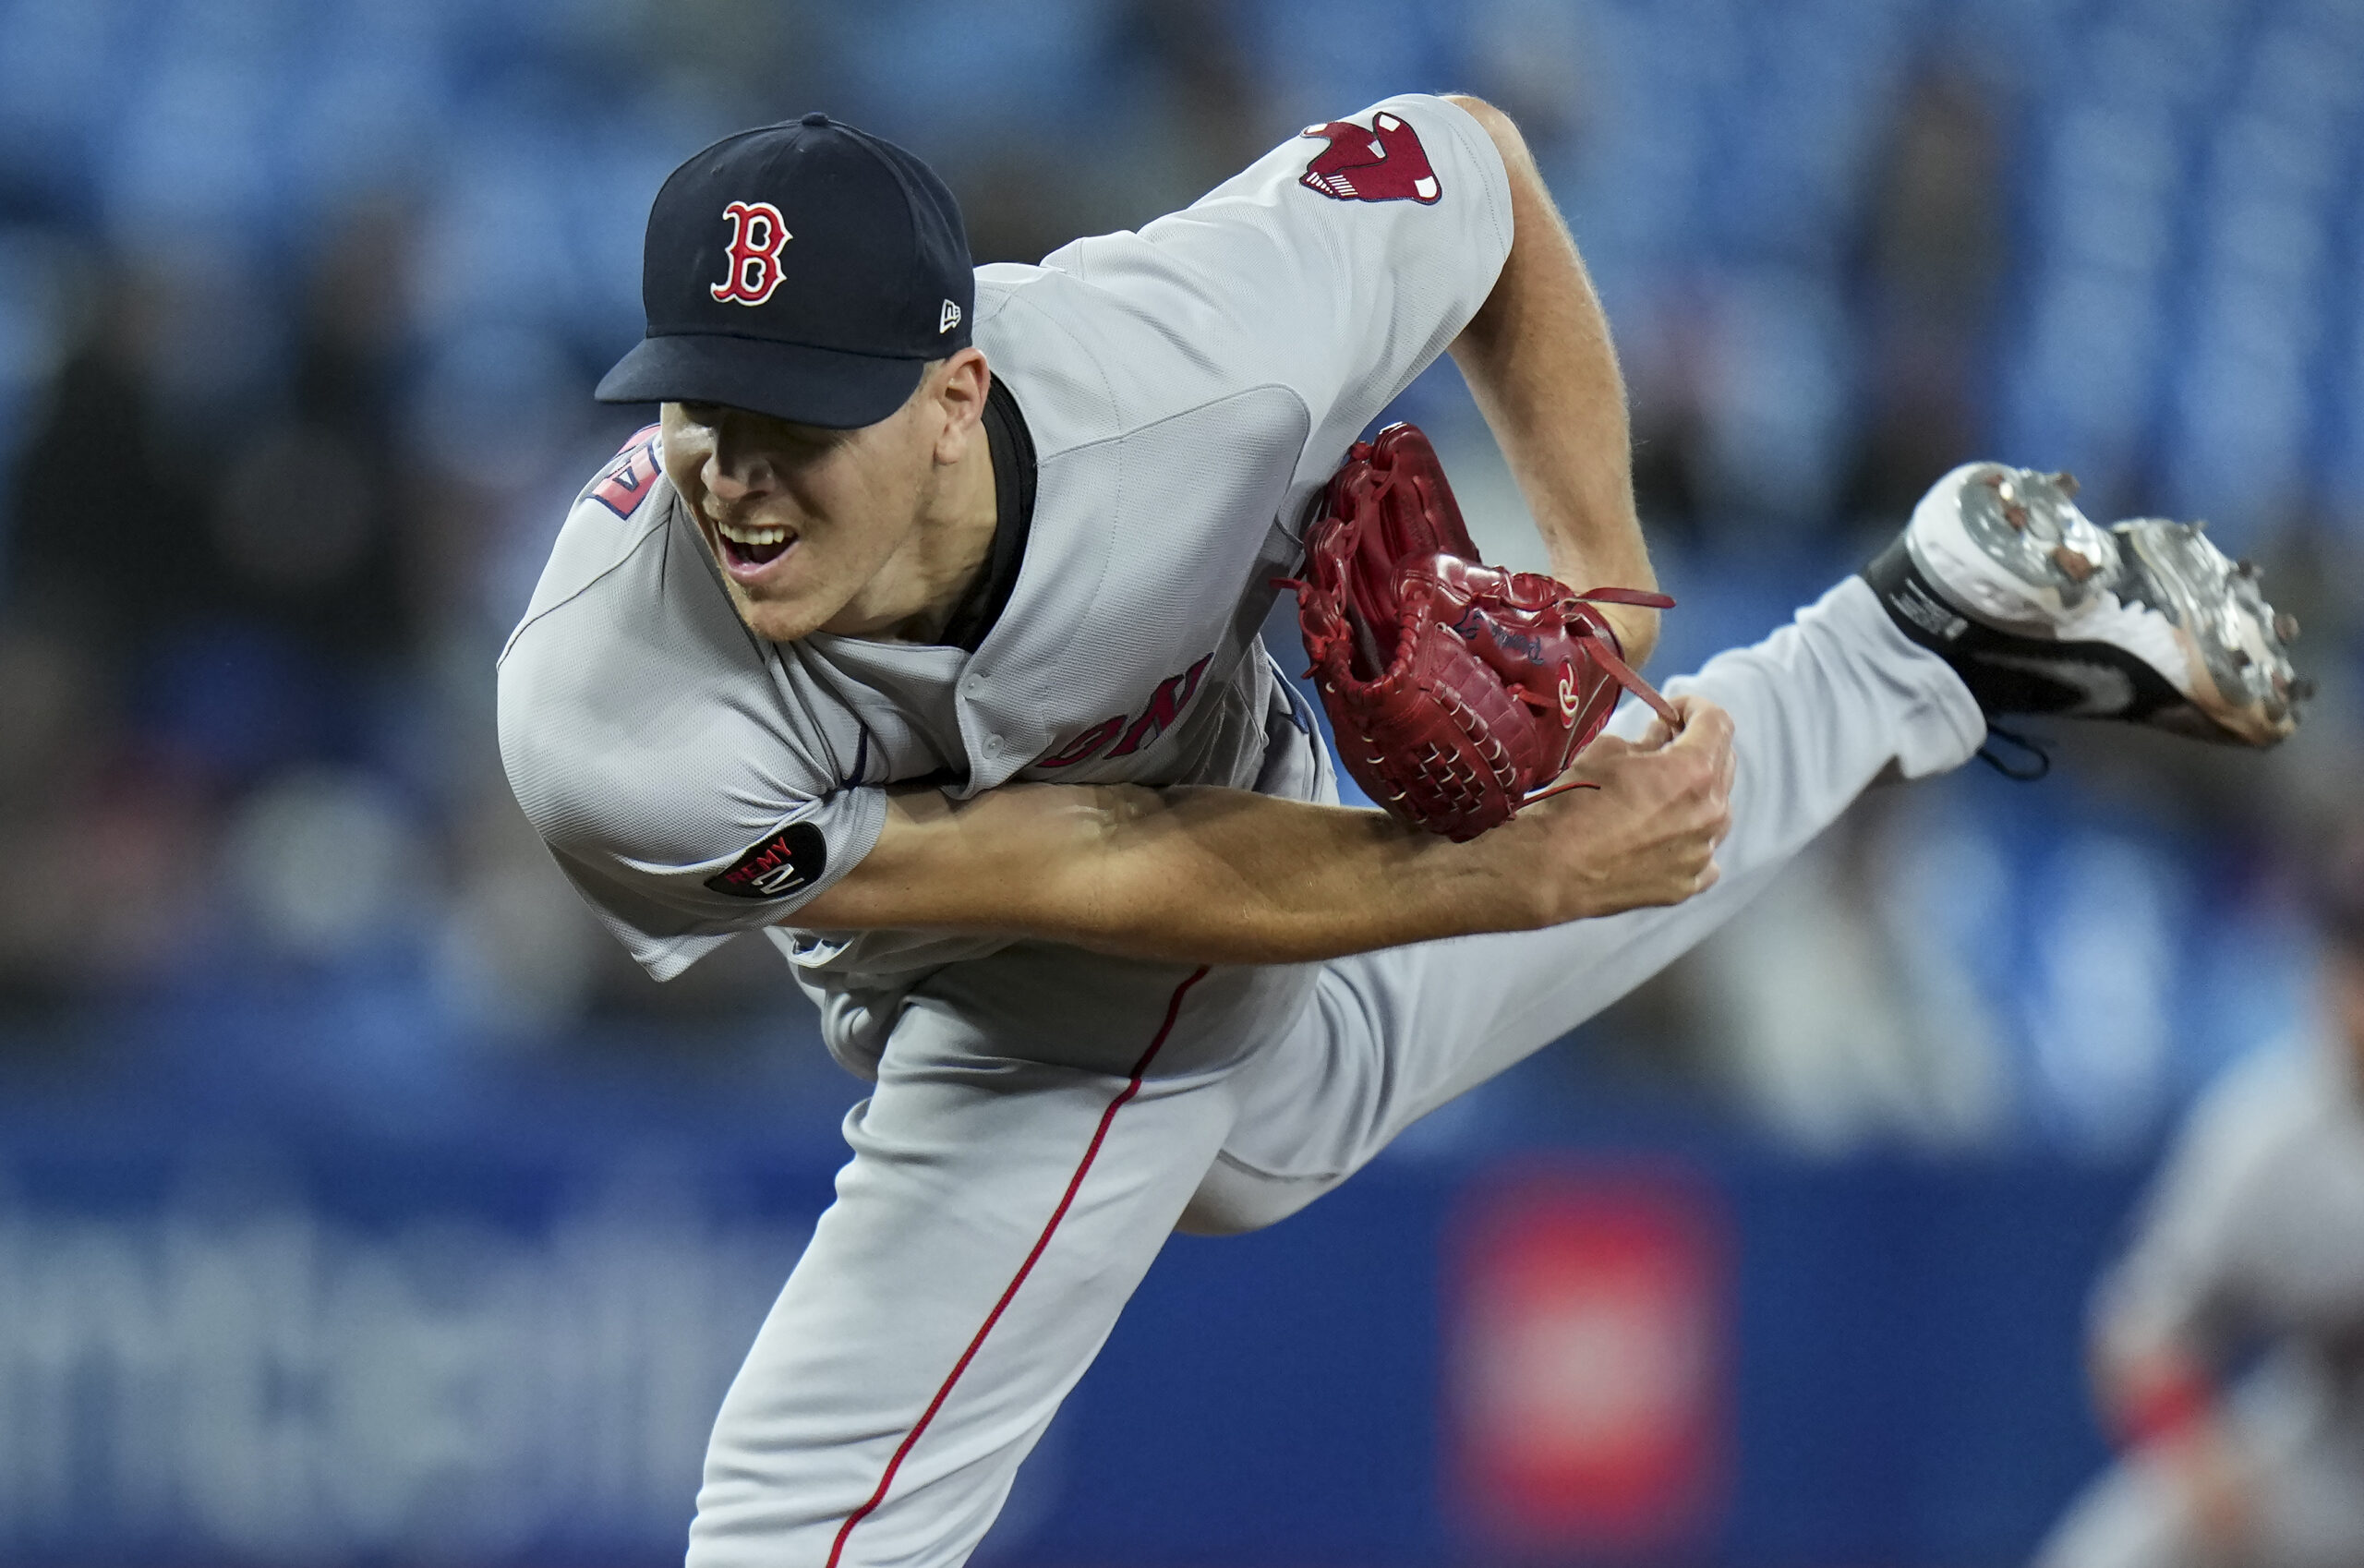 BREAKING NEWS: Red Sox star faces uncertain return after suffering devastating knee injury